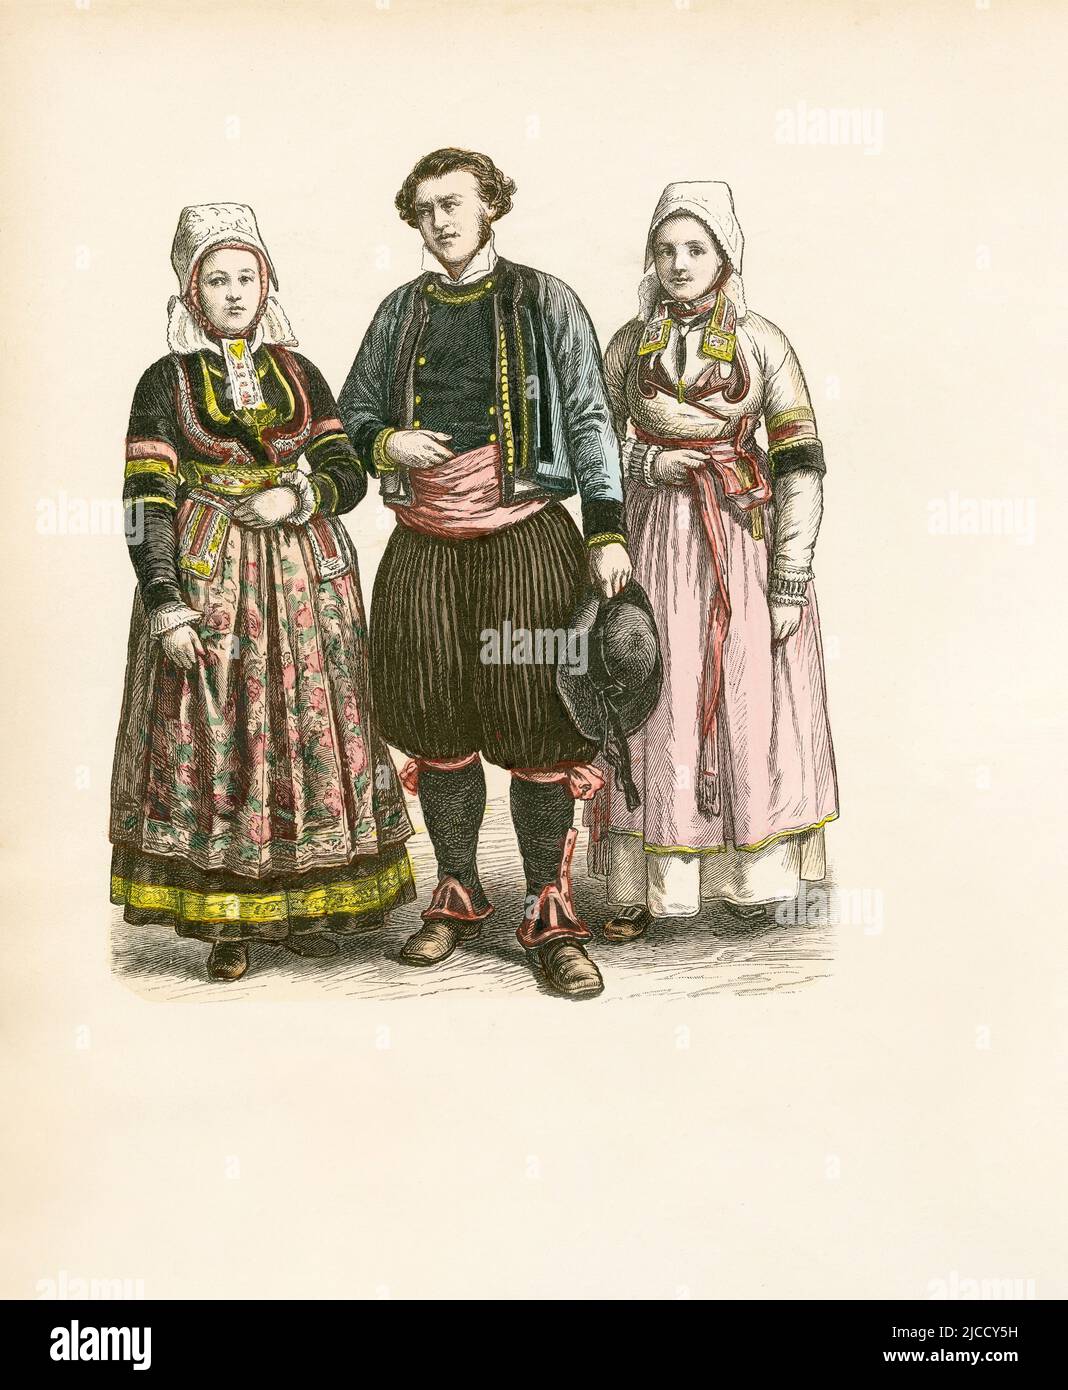 French Folk Dress, Brittany, late 19th Century, Illustration, The History of Costume, Braun & Schneider, Munich, Germany, 1861-1880 Stock Photo